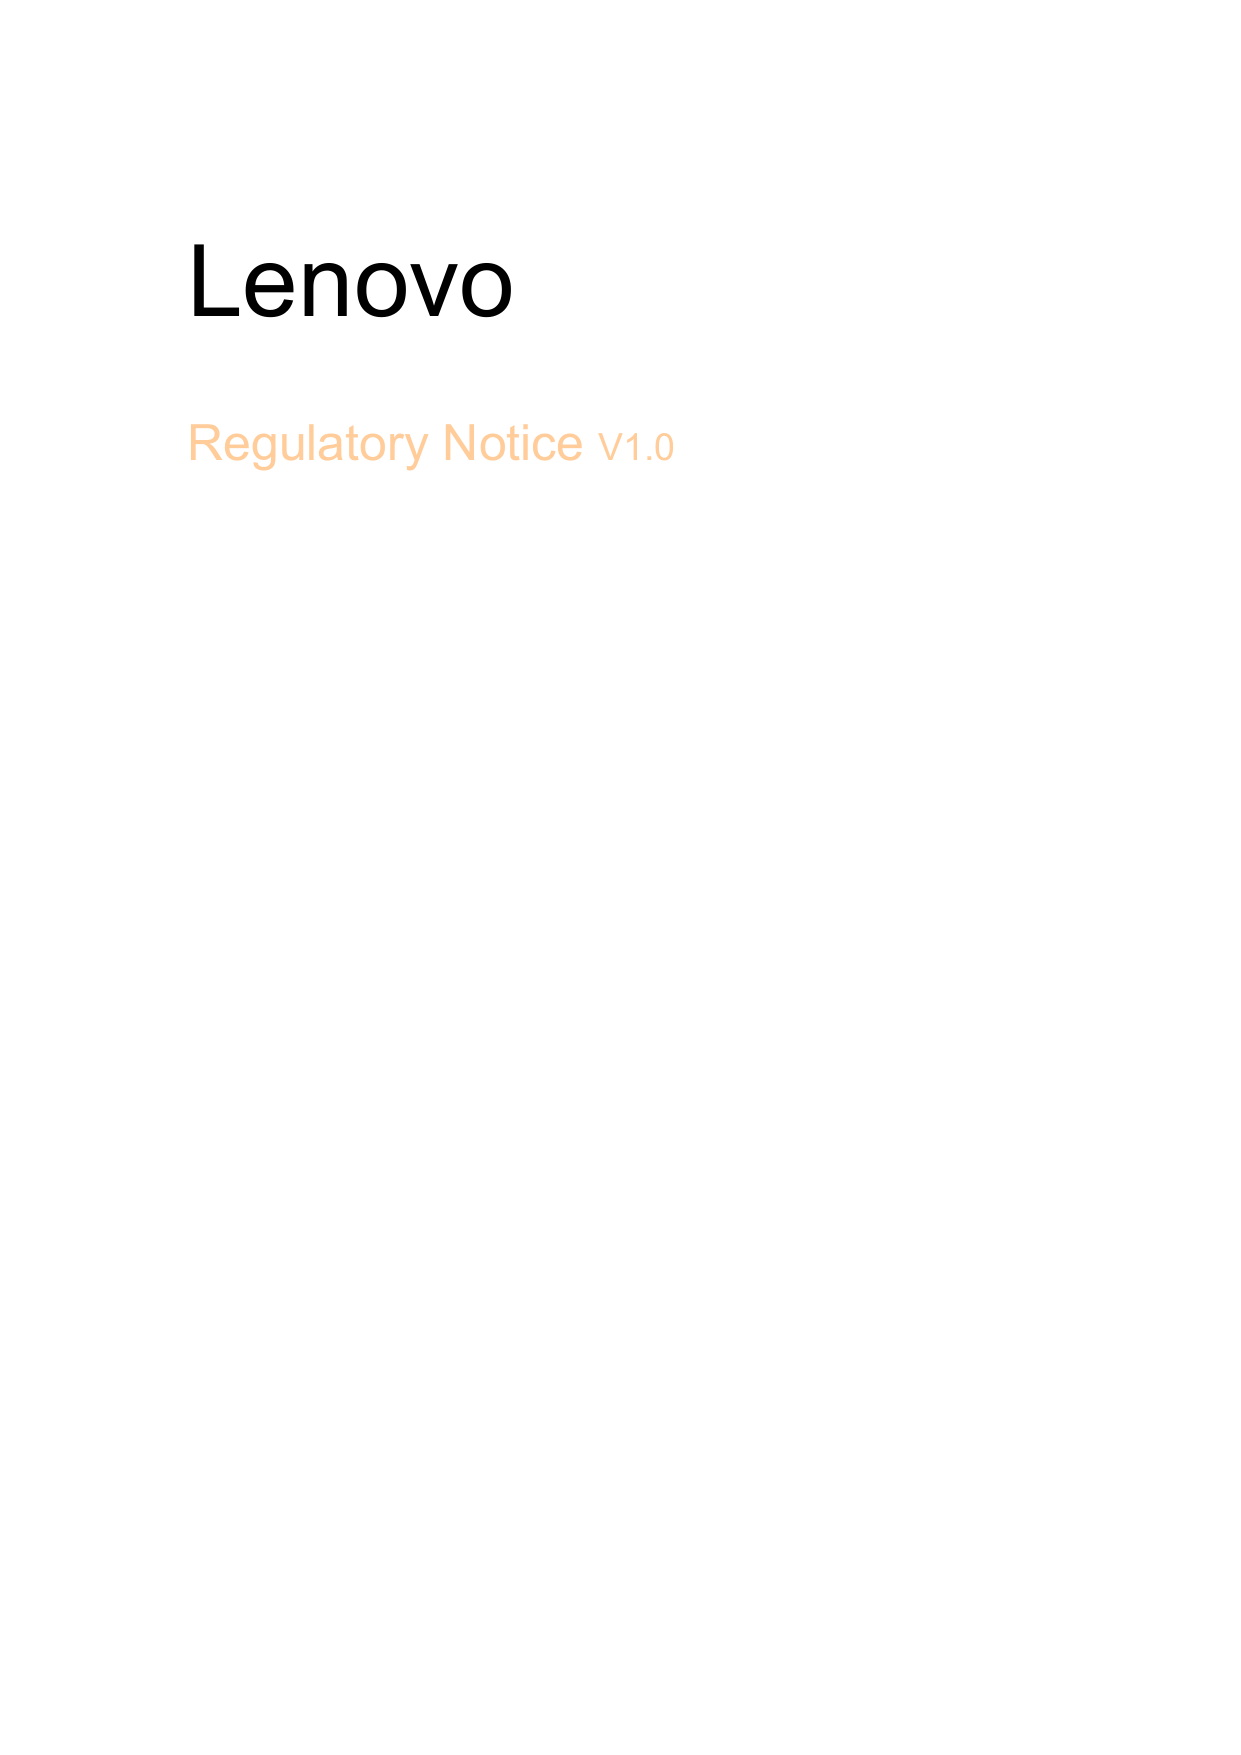 LenovoRegulatory Notice V1.0